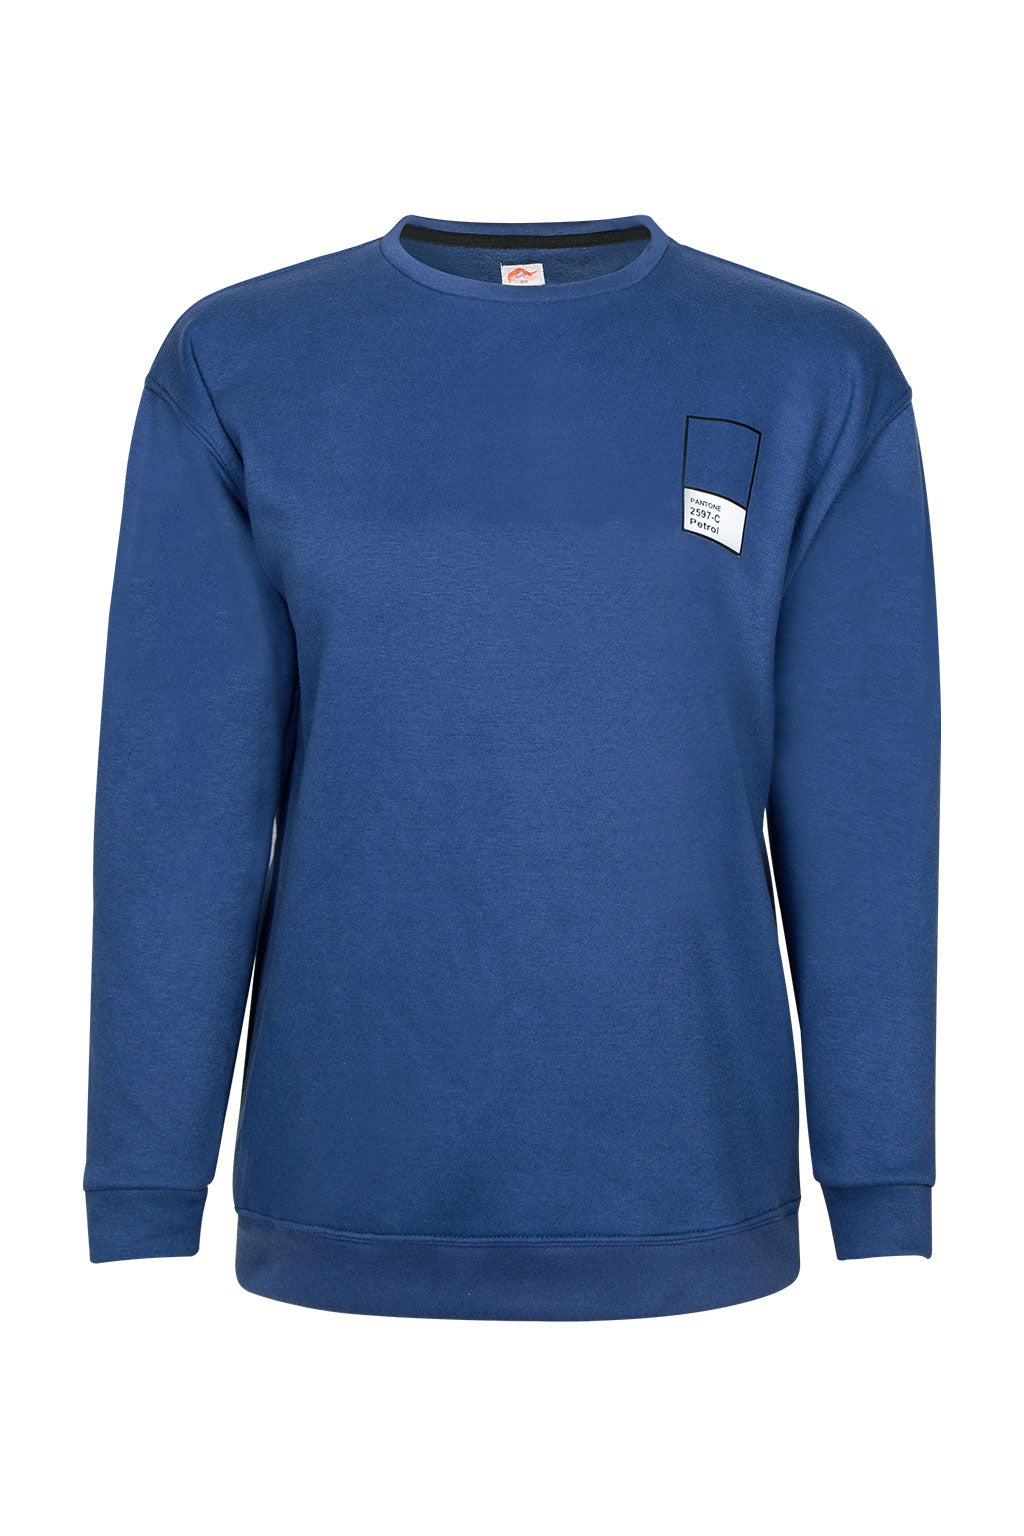 Petrol Blue Sweatshirt